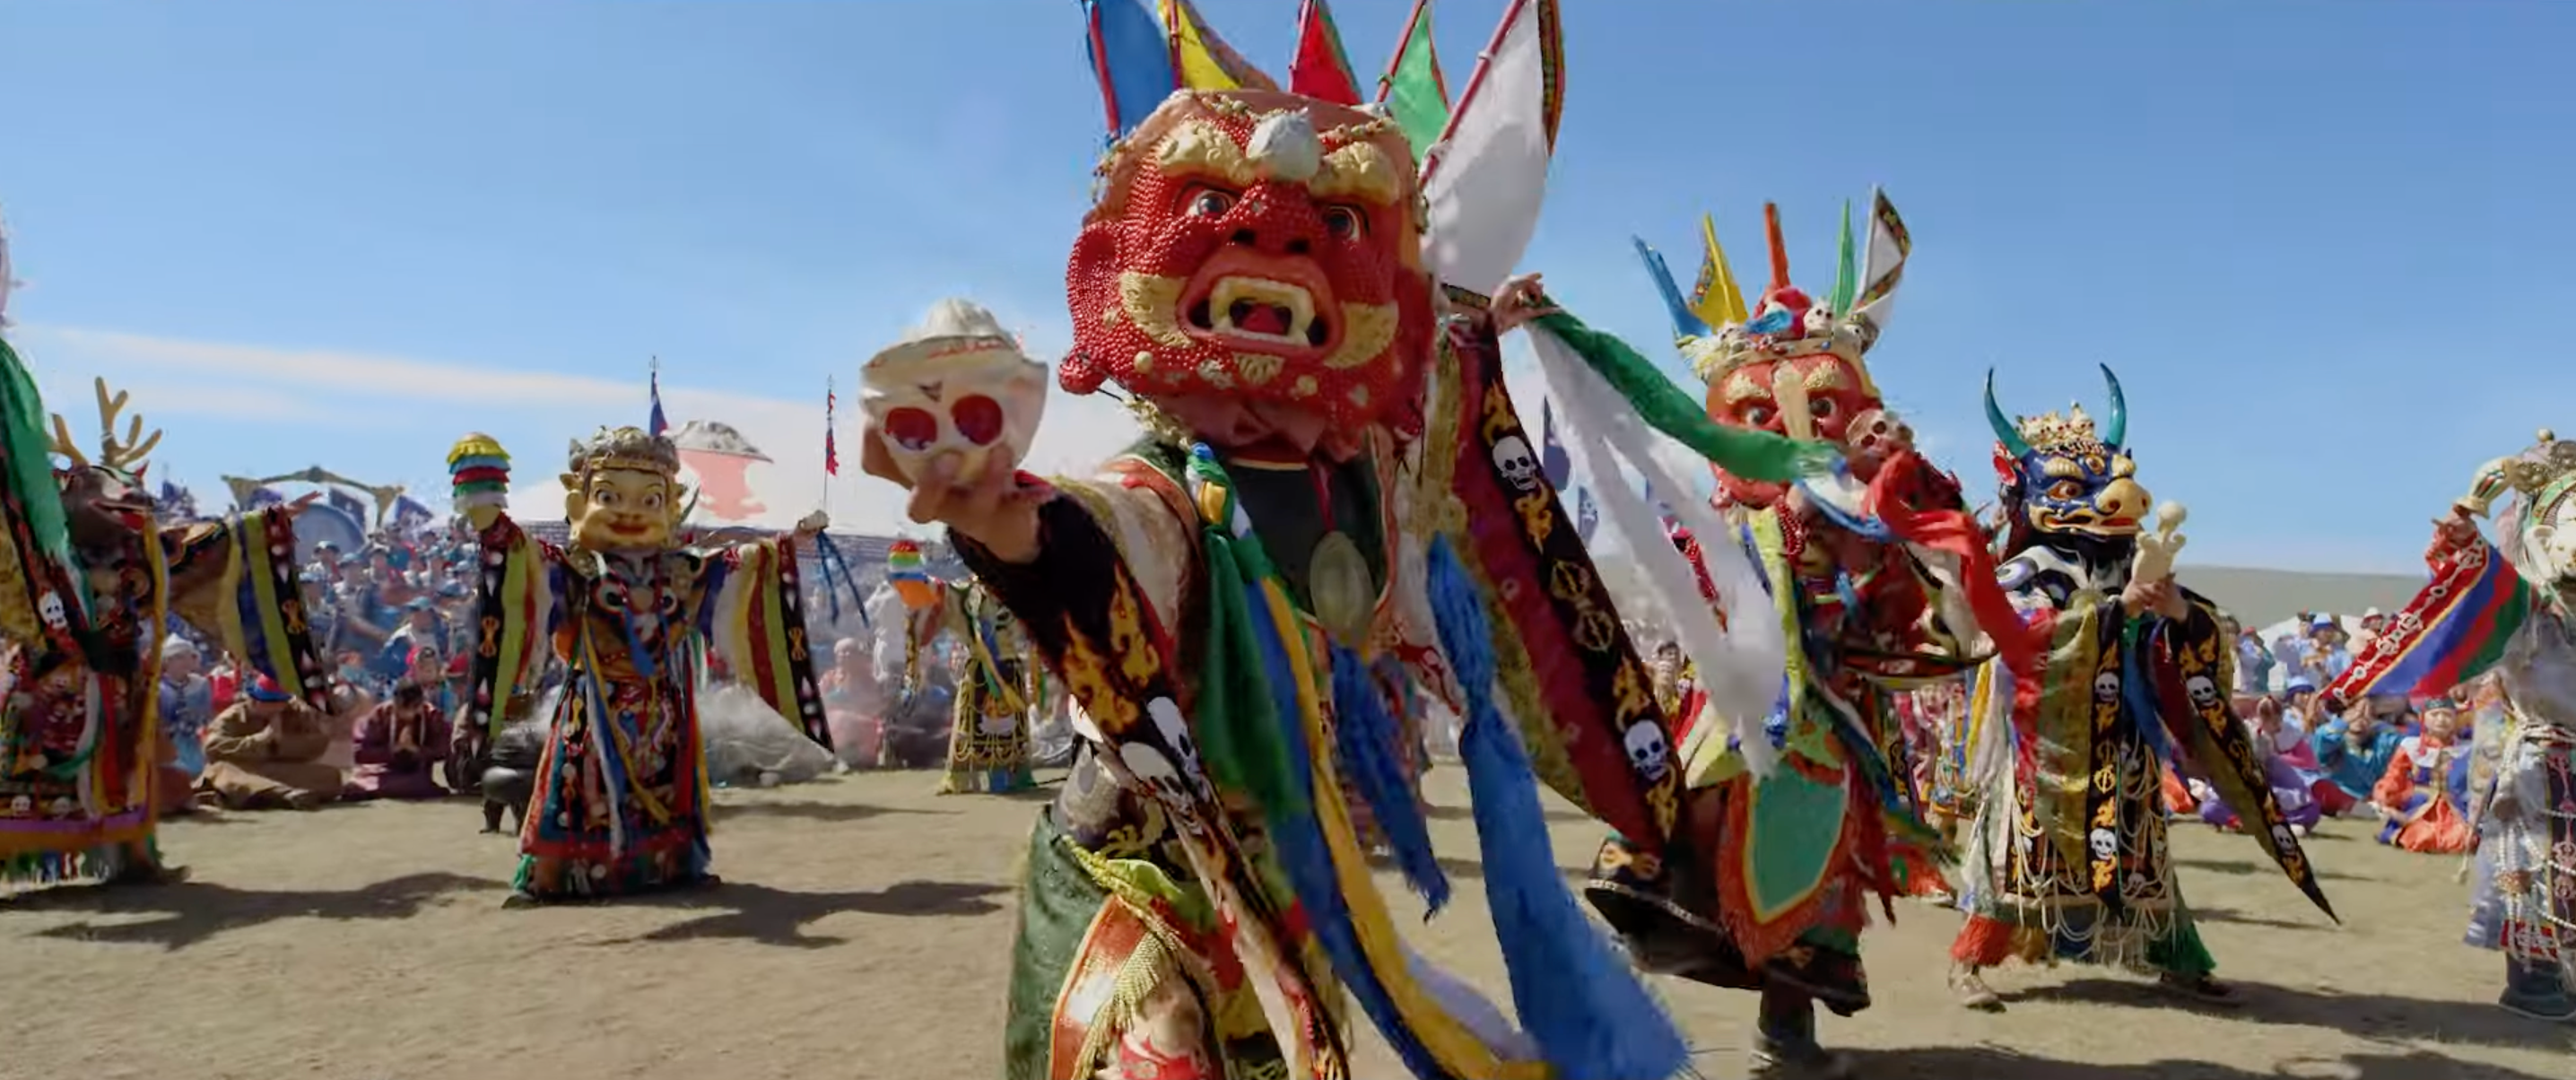 Tsam Dance is an integral part of Buddhism in Mongolia